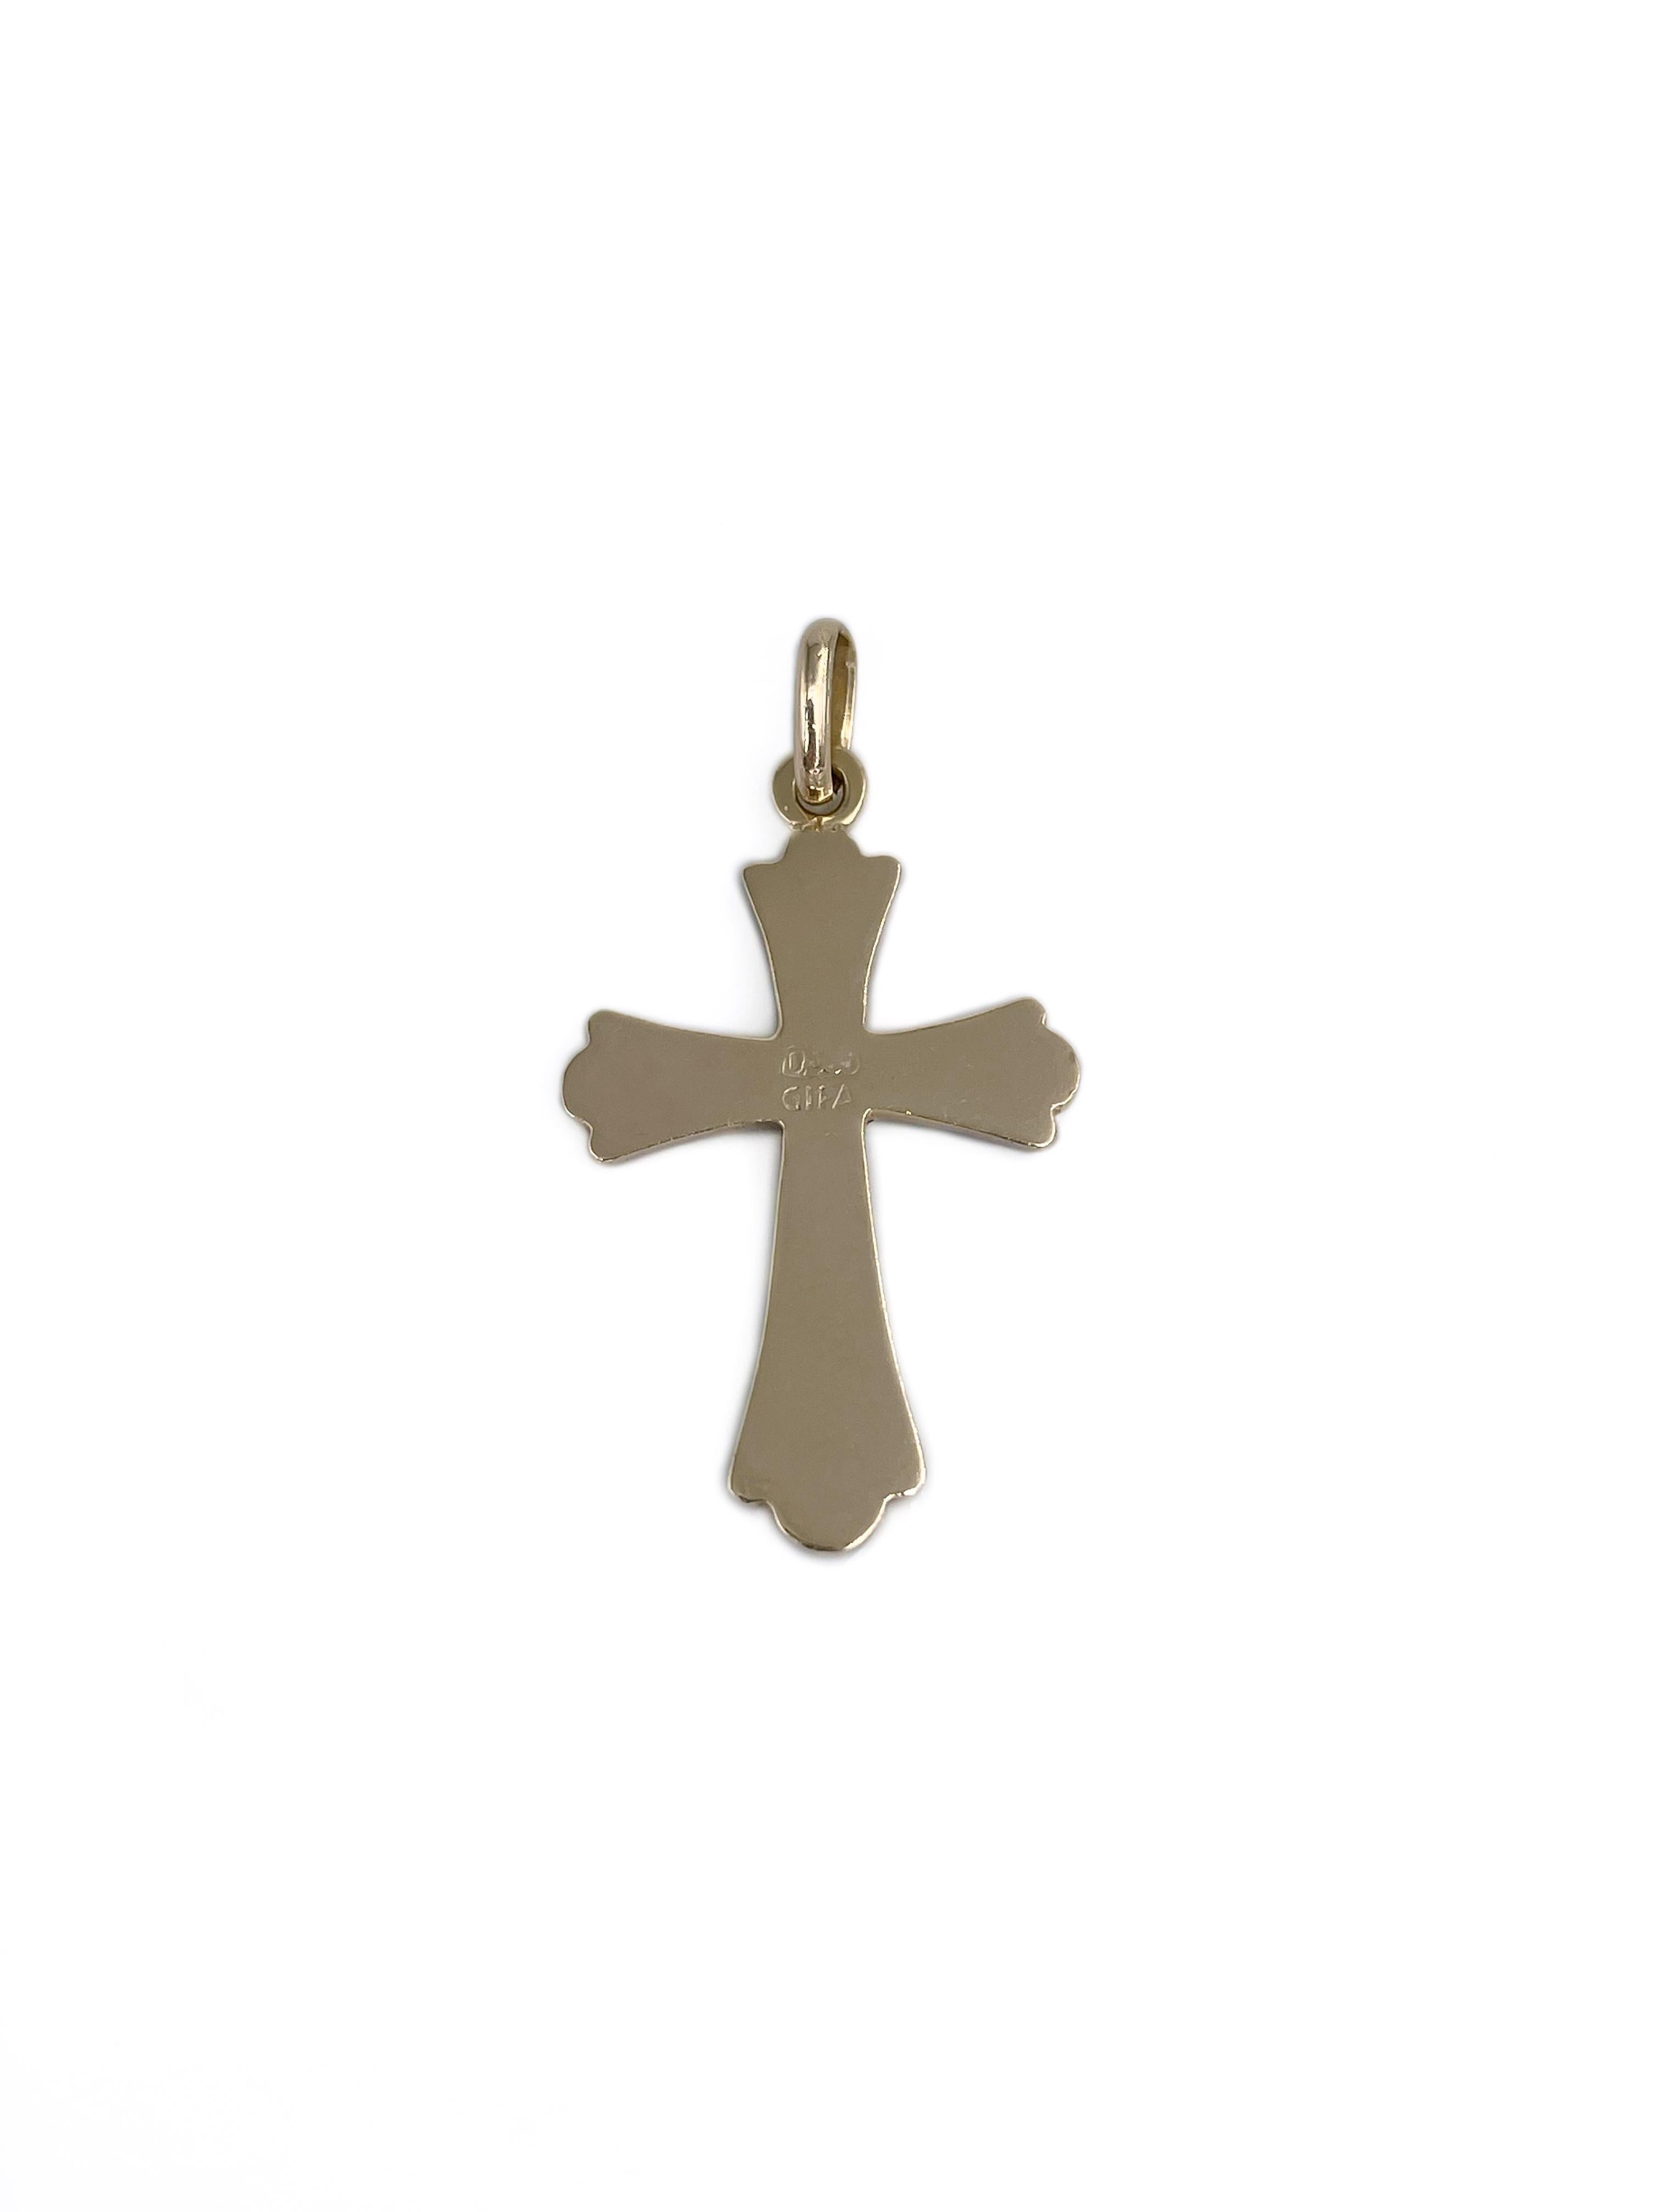 Victorian 14 Karat Gold Black Enamel Ornament Small Cross Pendant For Sale 1